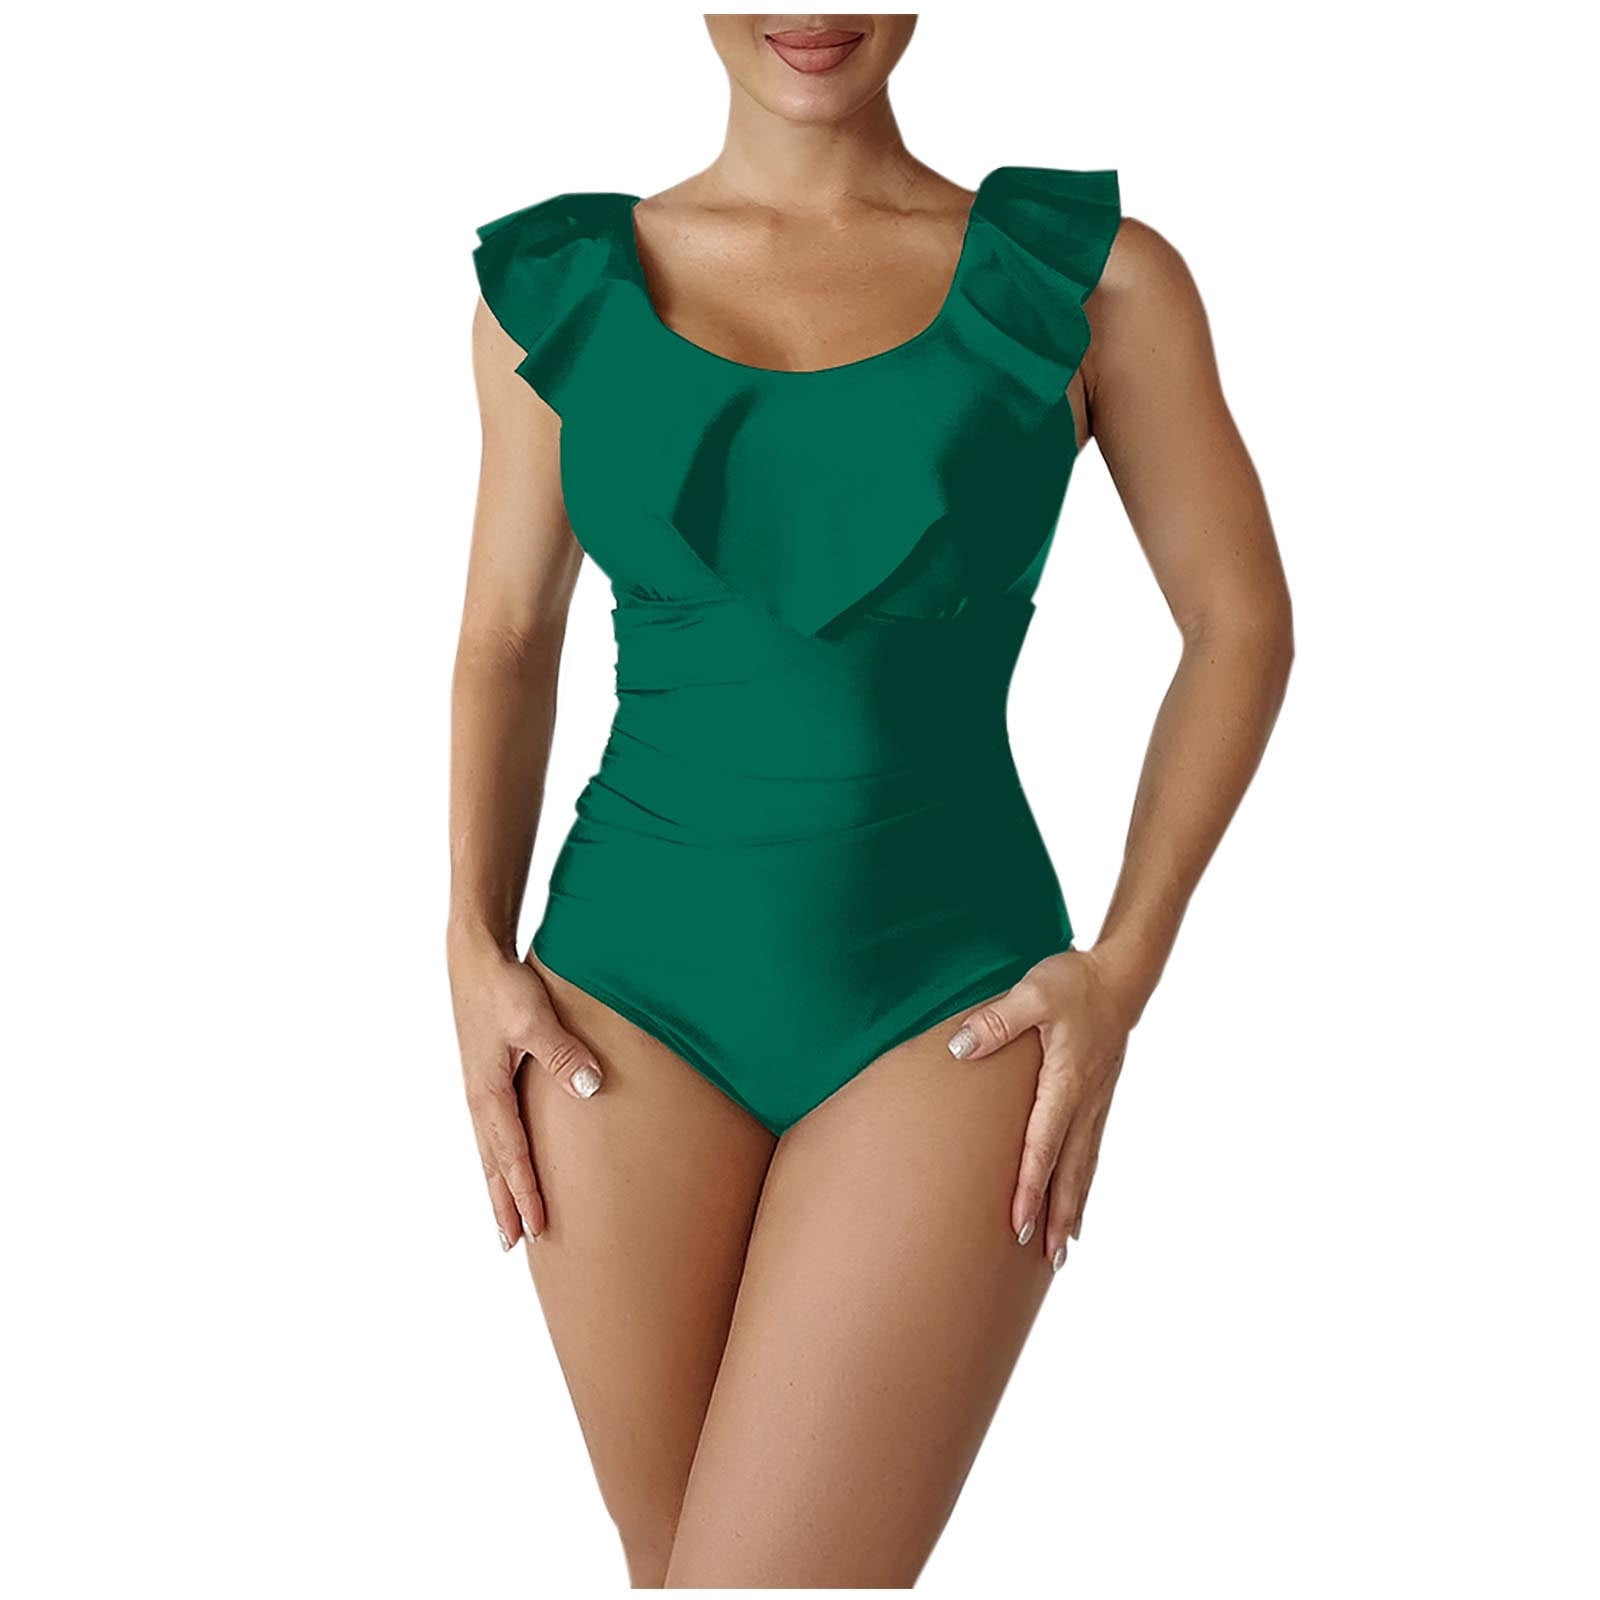 Olyvenn Sales Women's One Piece Bodysuit Strappy Tight Bathing